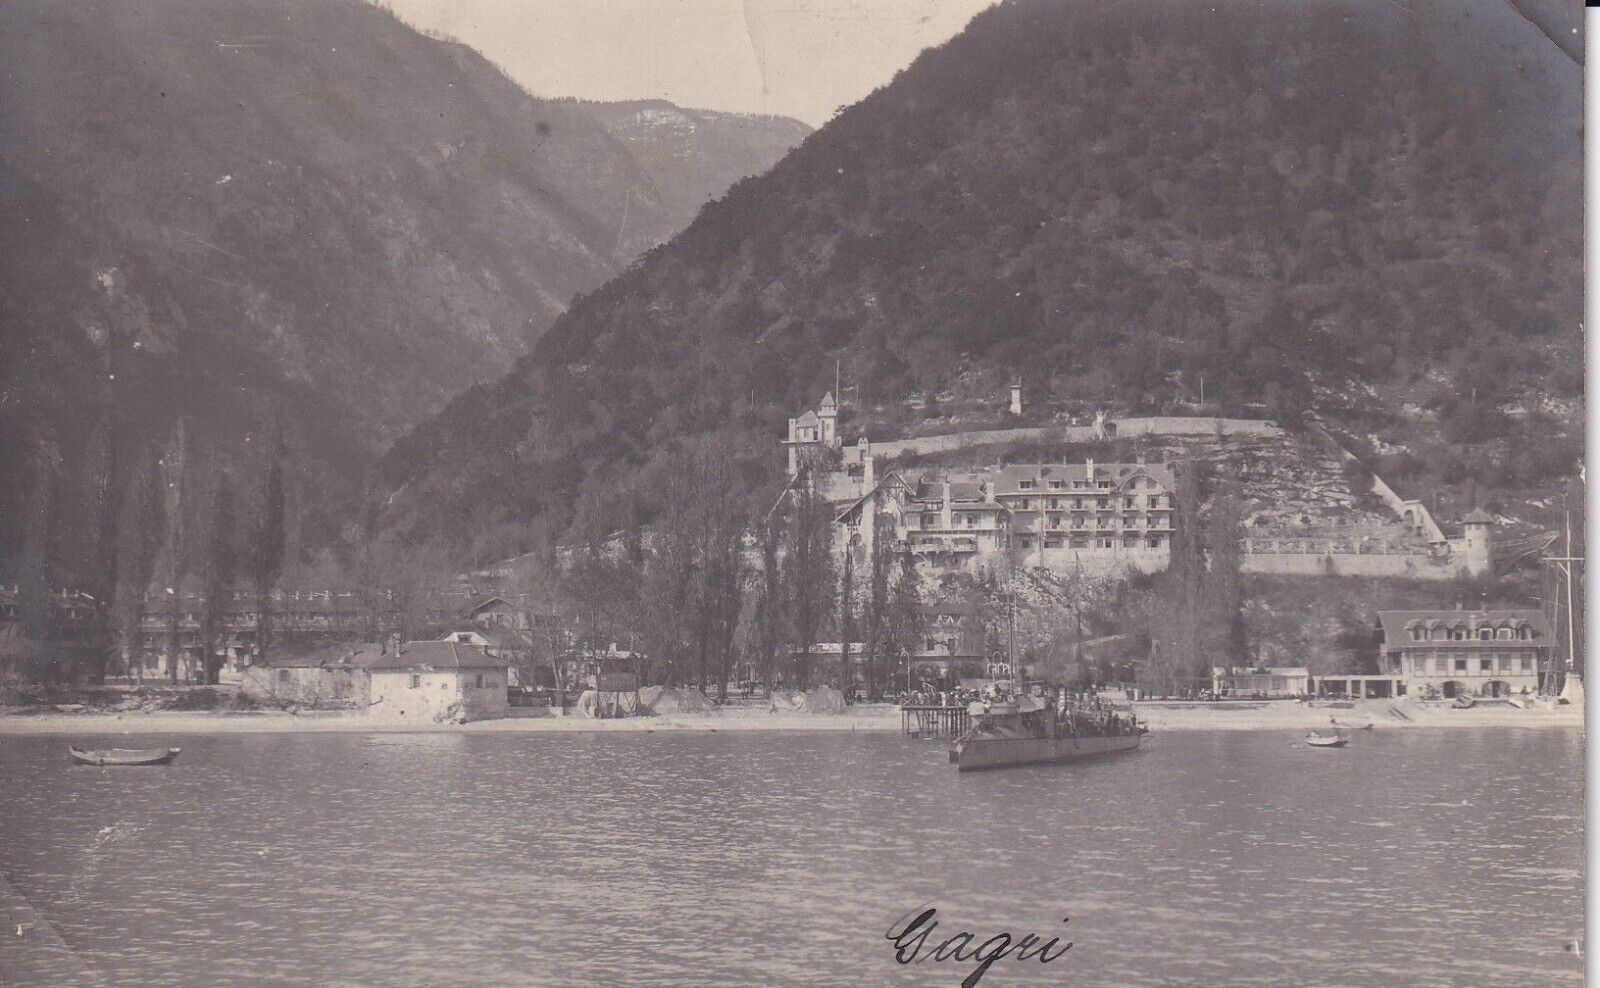 Gagri, Gagry, Caucasus, Georgia , photo postcard, ship